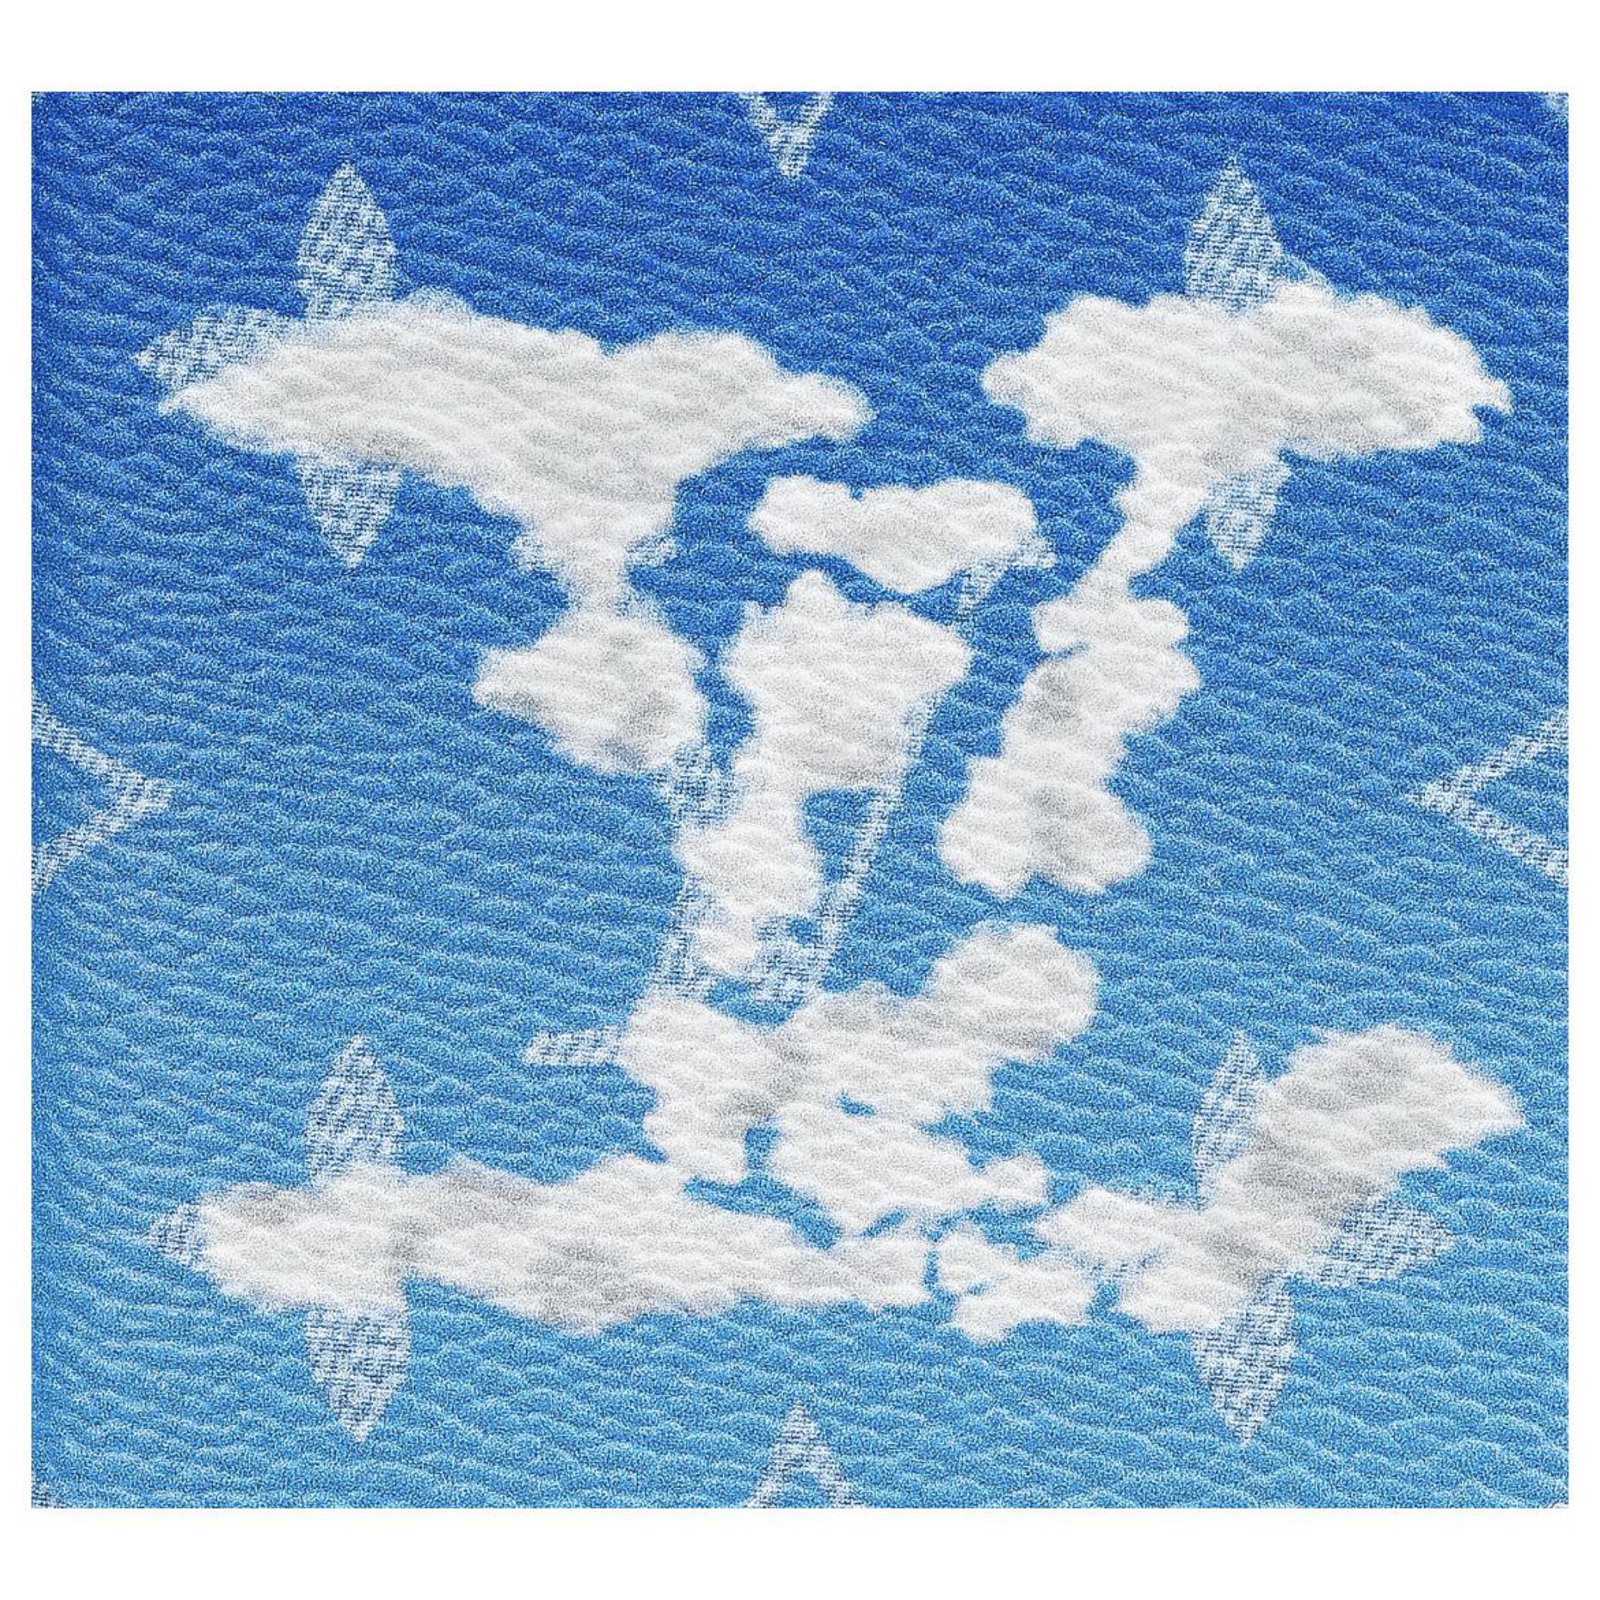 LV Pocket organizer clouds